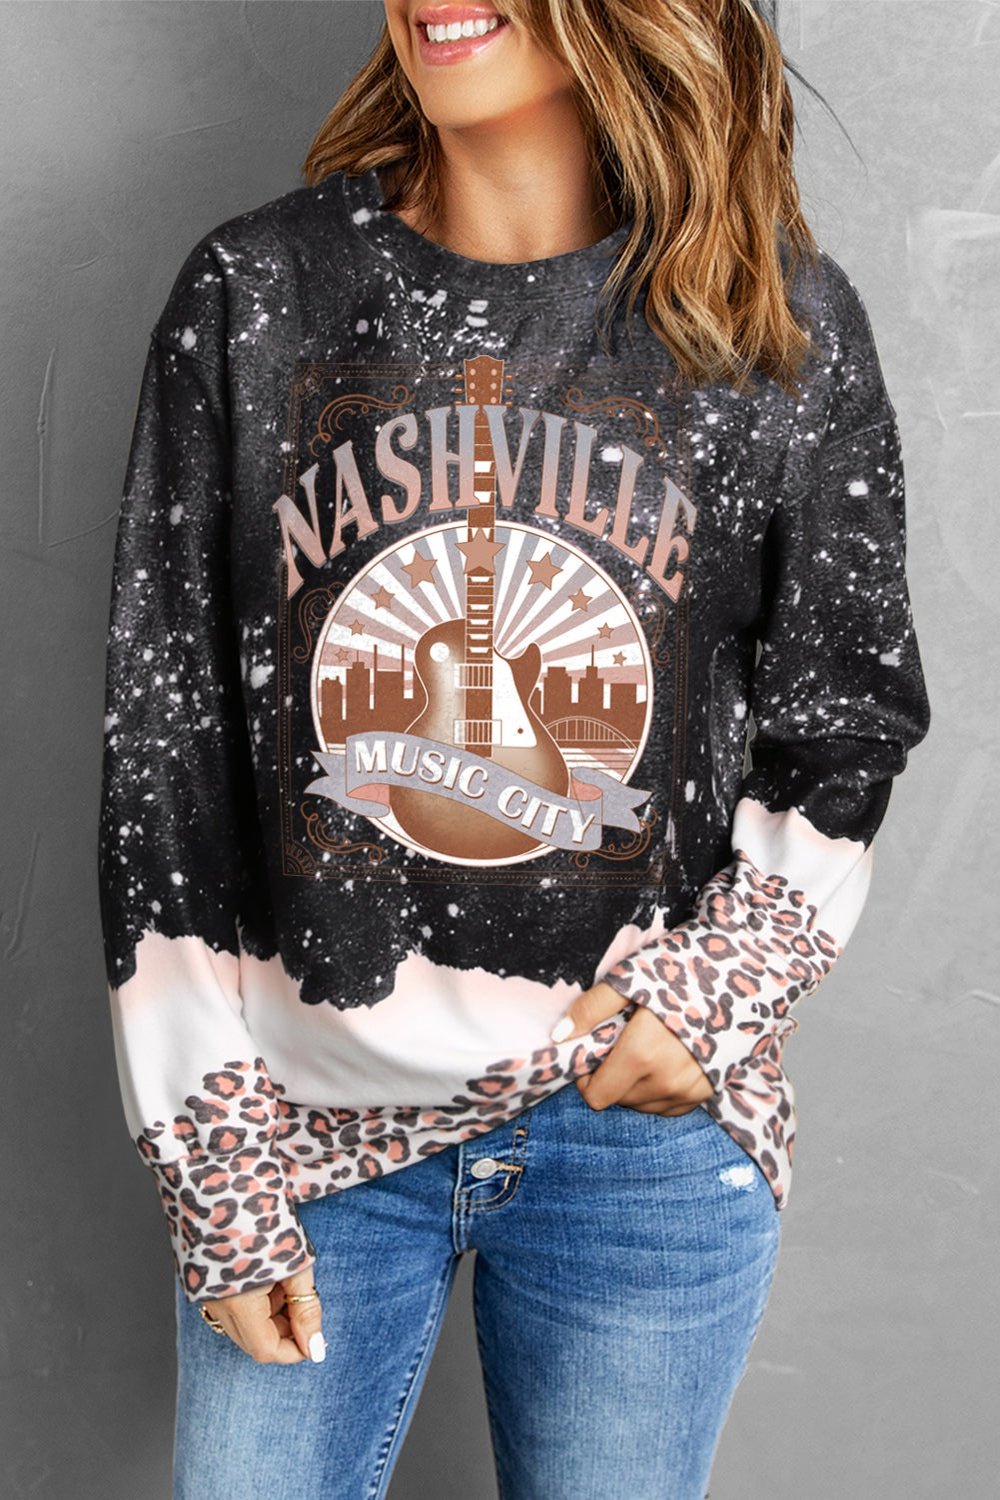 Printed NASHVILLE MUSIC CITY Graphic Sweatshirt - Sweatshirts & Hoodies - FITGGINS